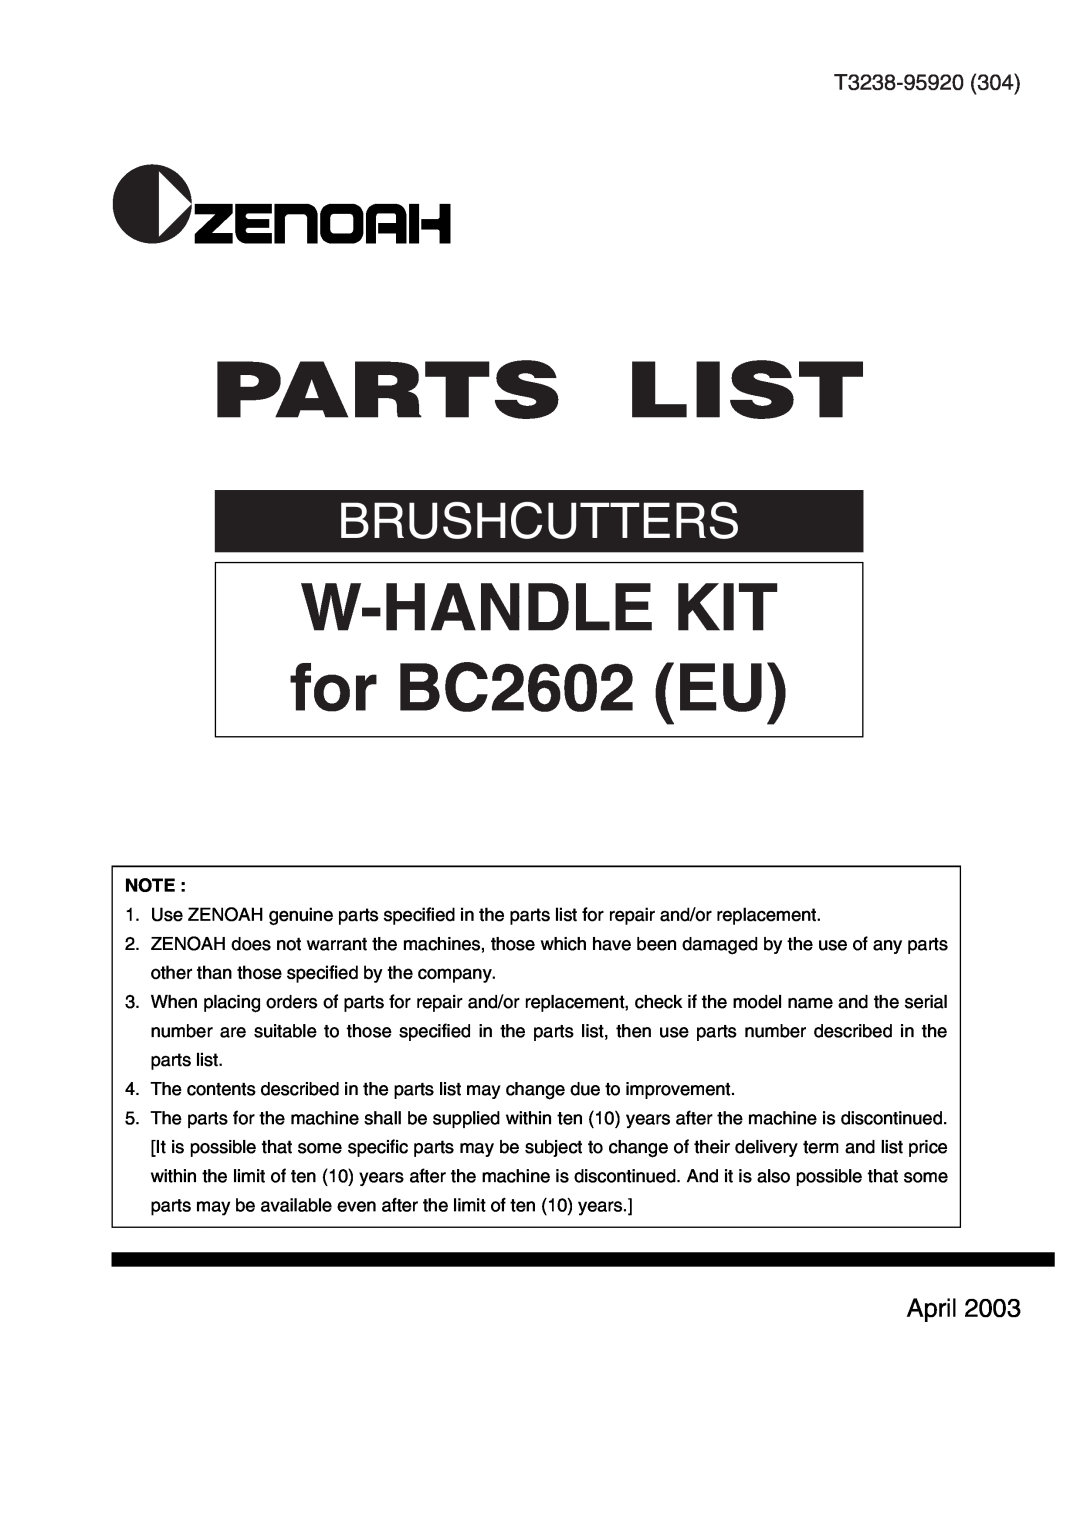 Zenoah BC2602 (EU) manual Parts List, W-HANDLEKIT for BC2602 EU, Brushcutters, April, T3238-95920304 